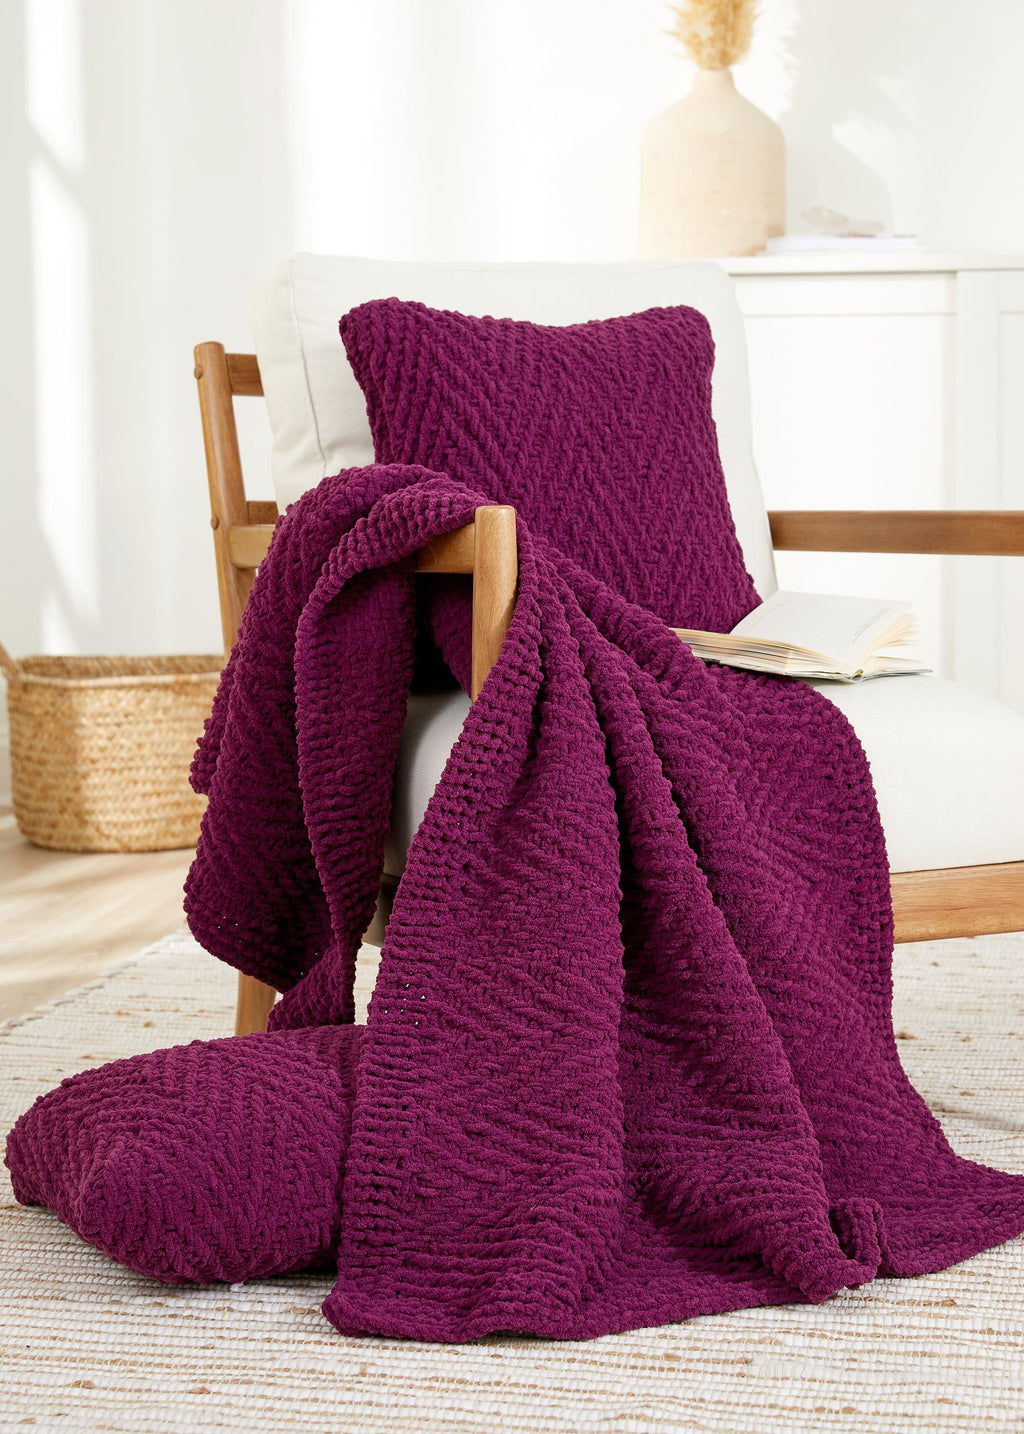 Woven Herringbone Blanket and Pillows – Premier Yarns